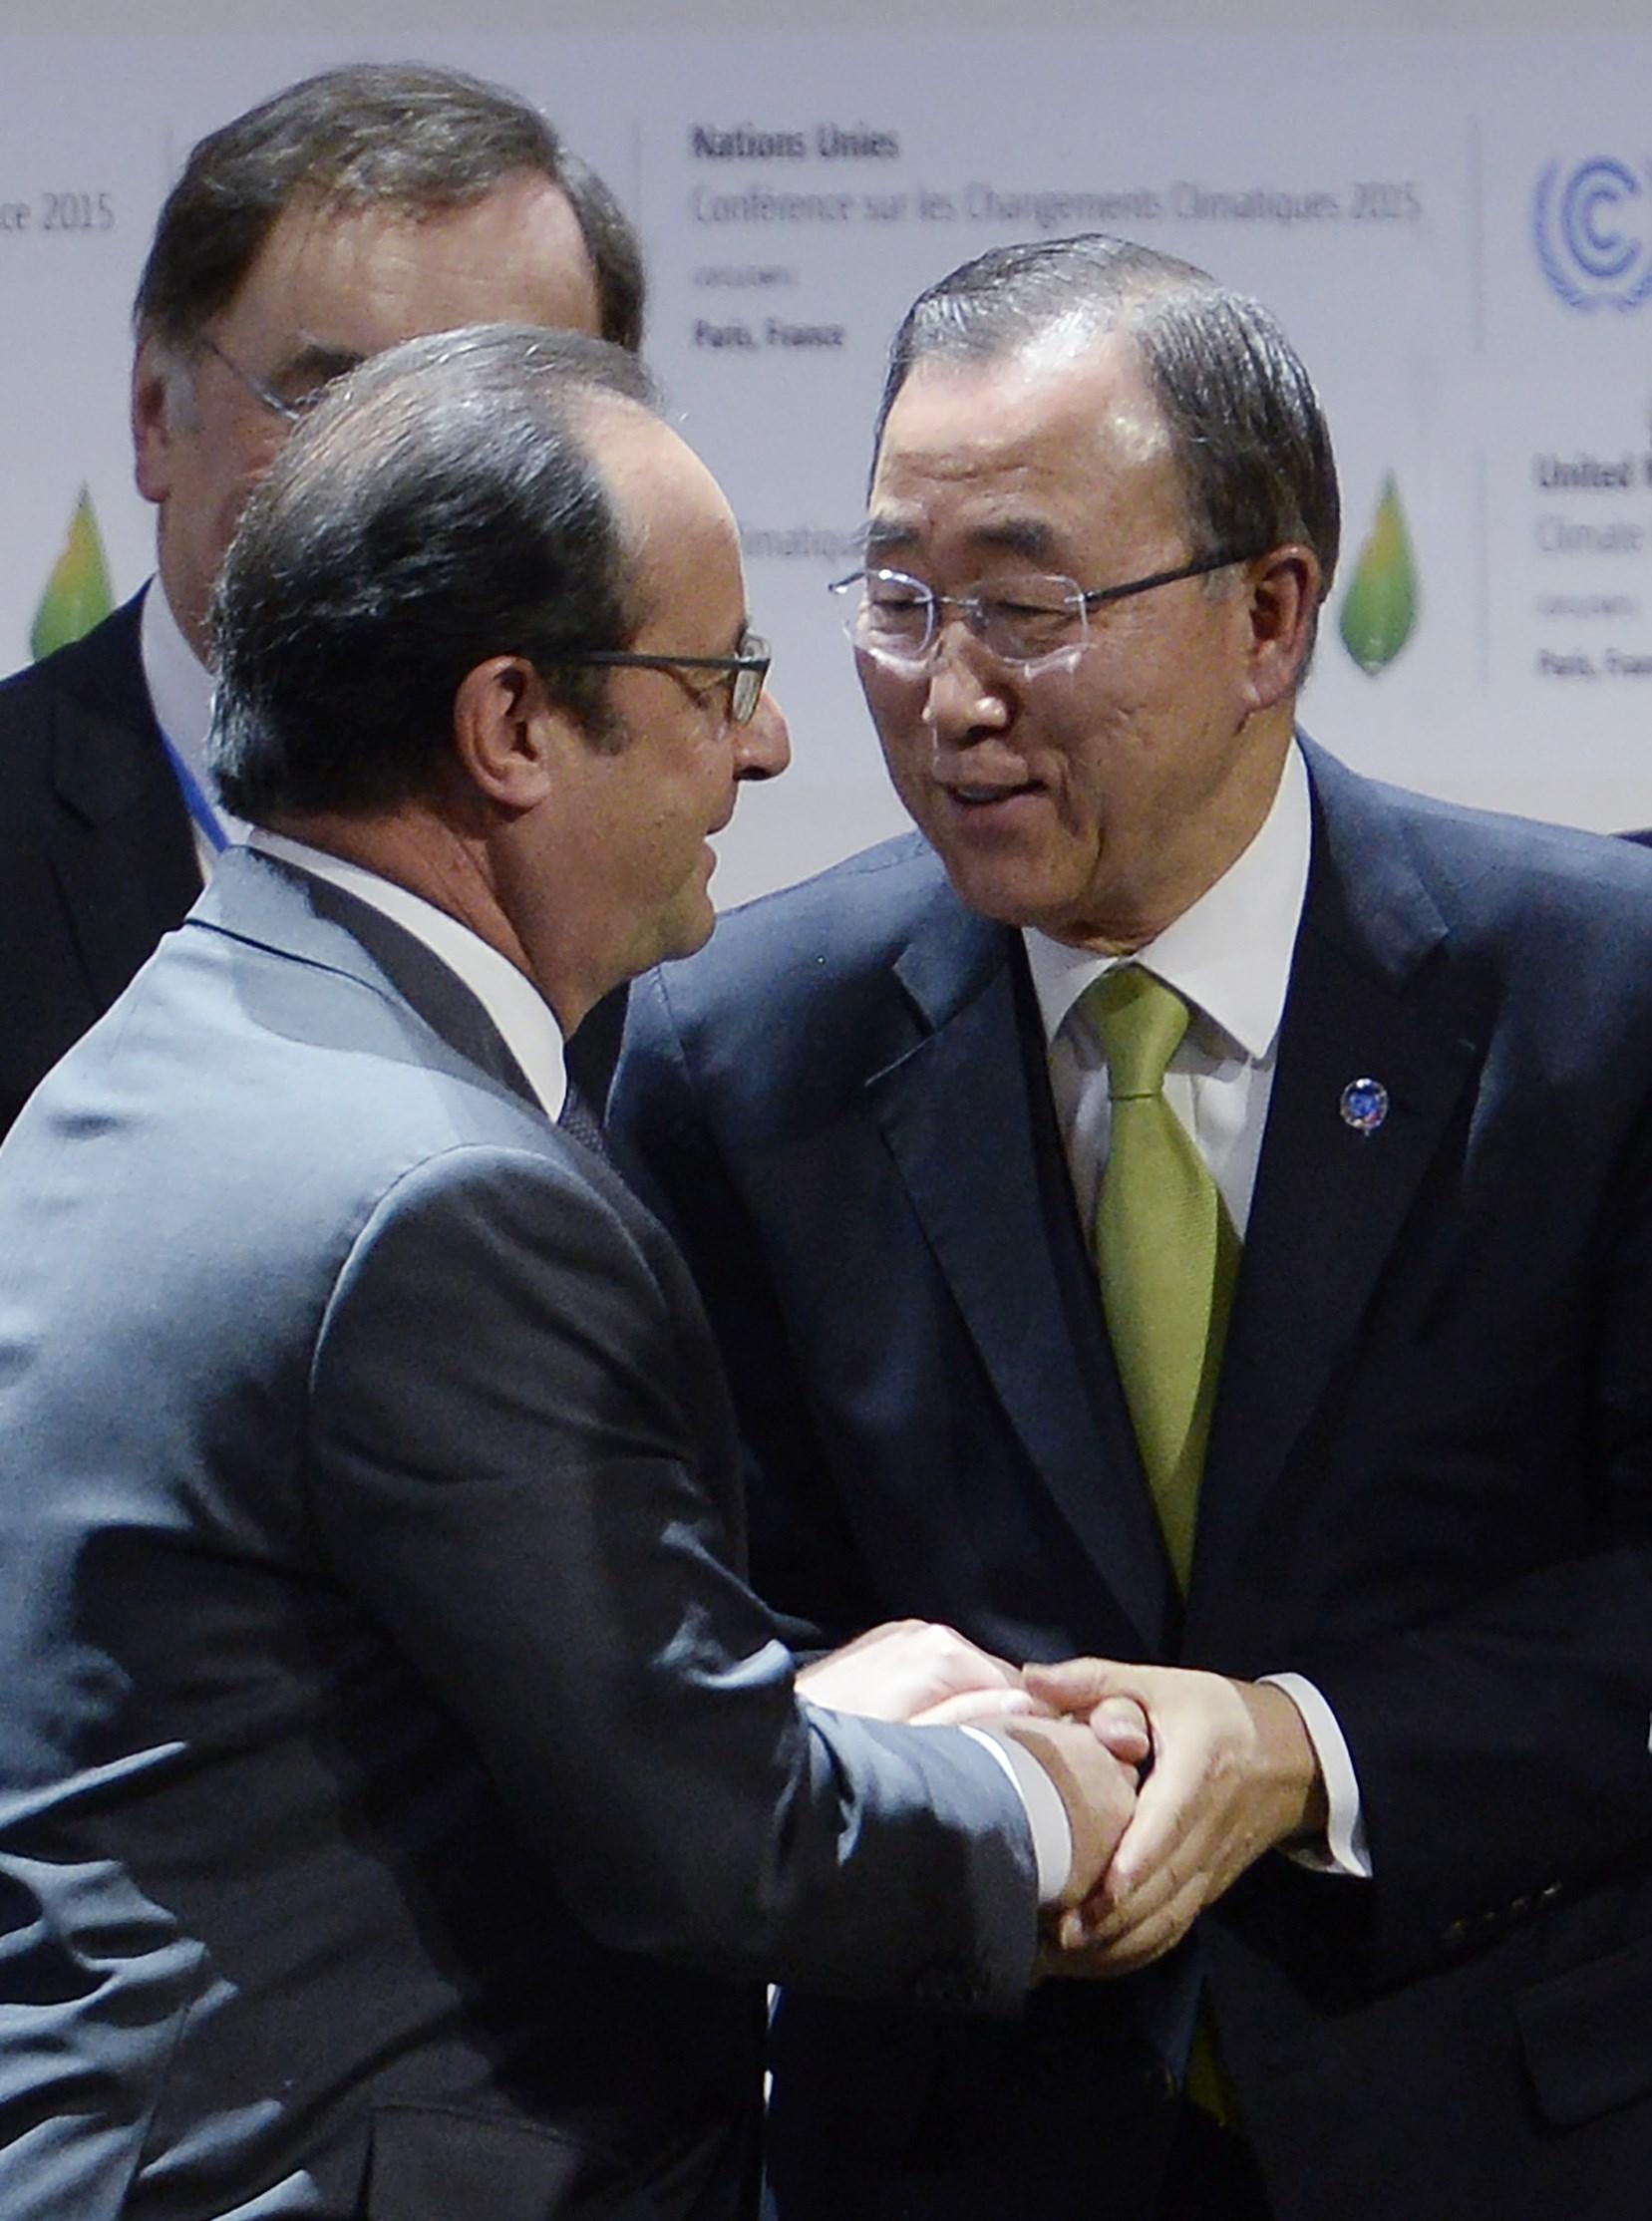 Frankrikes president Hollande och FN:s generalsekreterare Ban Ki-Moon skakar hand.